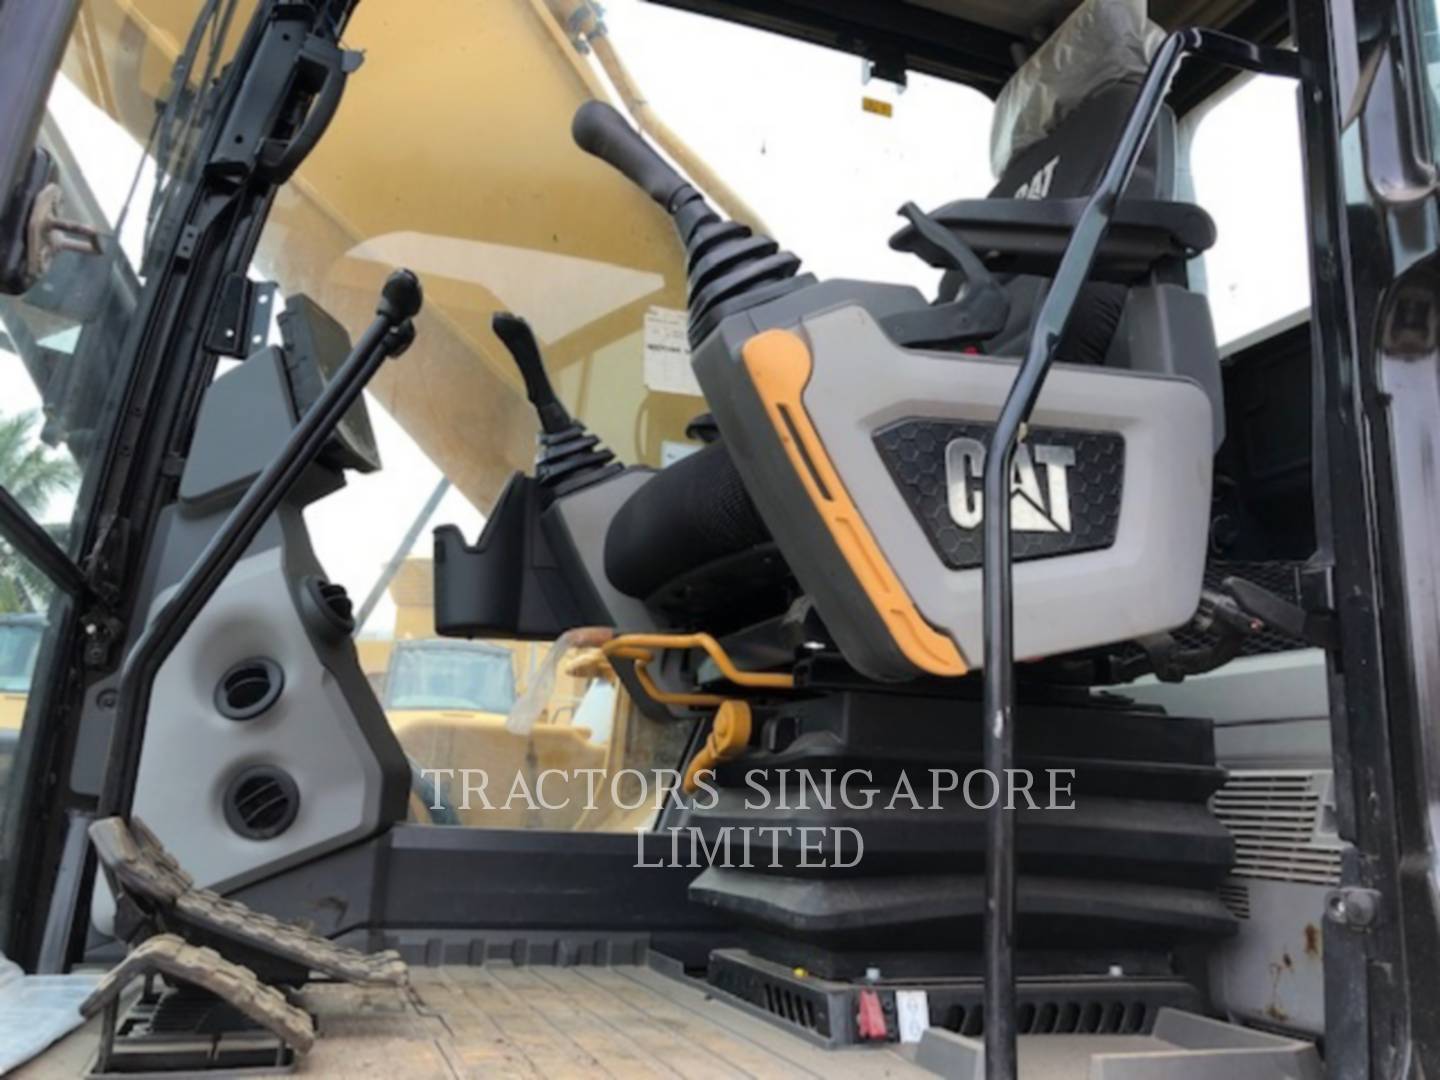 wtk?JHNyYz1lZjA3NzE4OWQwOGFmNDM2YzNiNmY1MTY1YjlhYjAxNiYkdHh0PVRSQUNUT1JTJTIwU0lOR0FQT1JFJTIwTElNSVRFRCYxMTQ5 345-07GC | Tractors Singapore